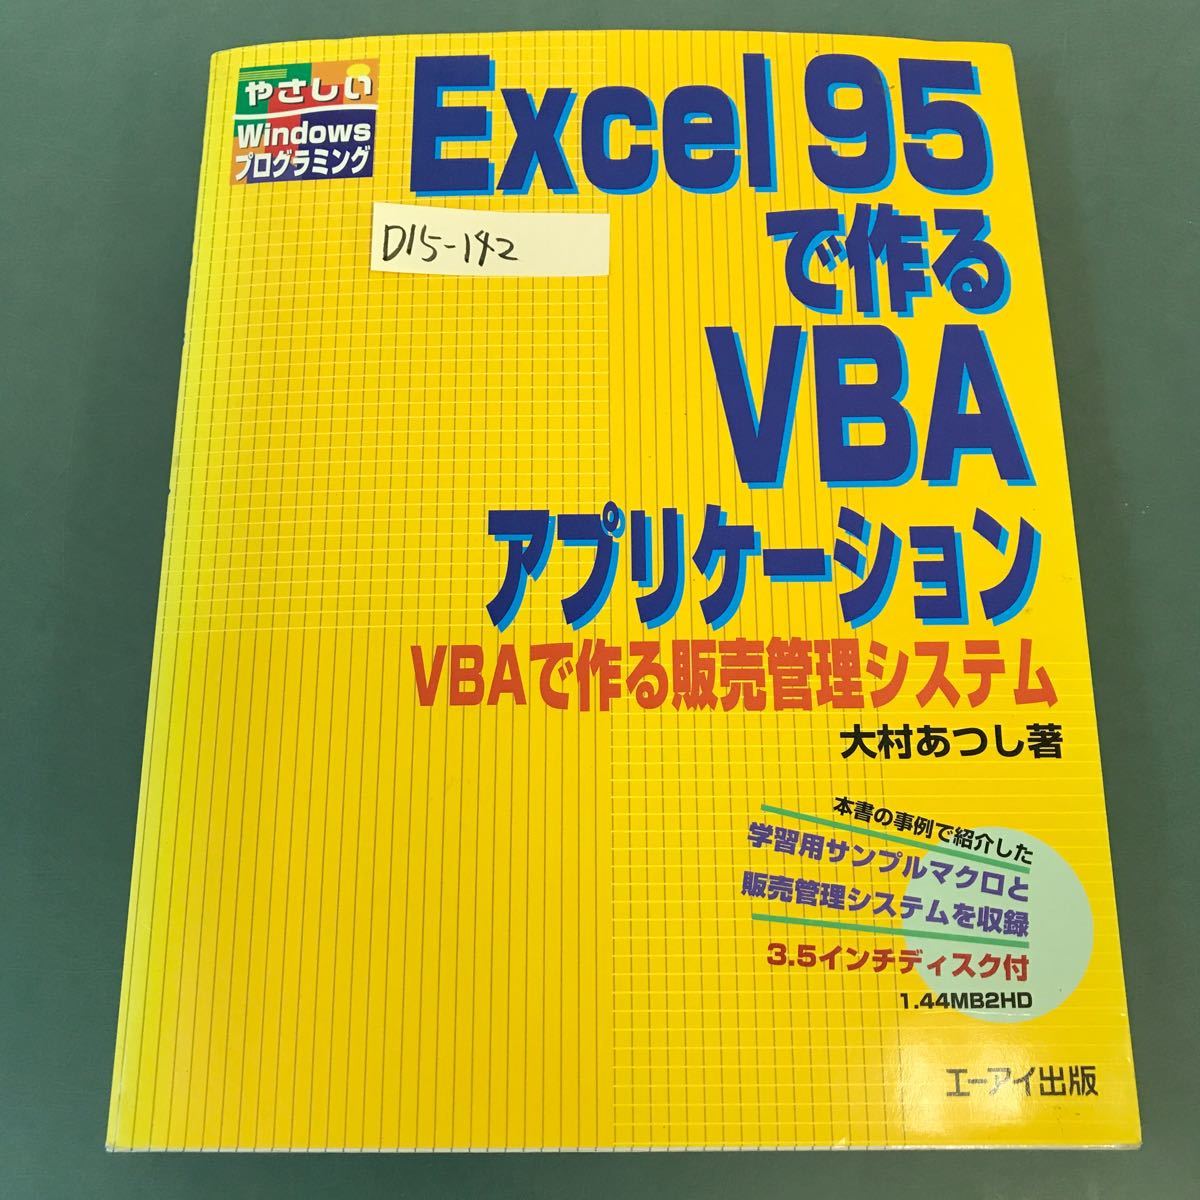 D15-142 Excel95で作るVBAアプリケーション VBAで作る販売管理システム 3.5インチディスク付 大村あつし著 エーアイ出版